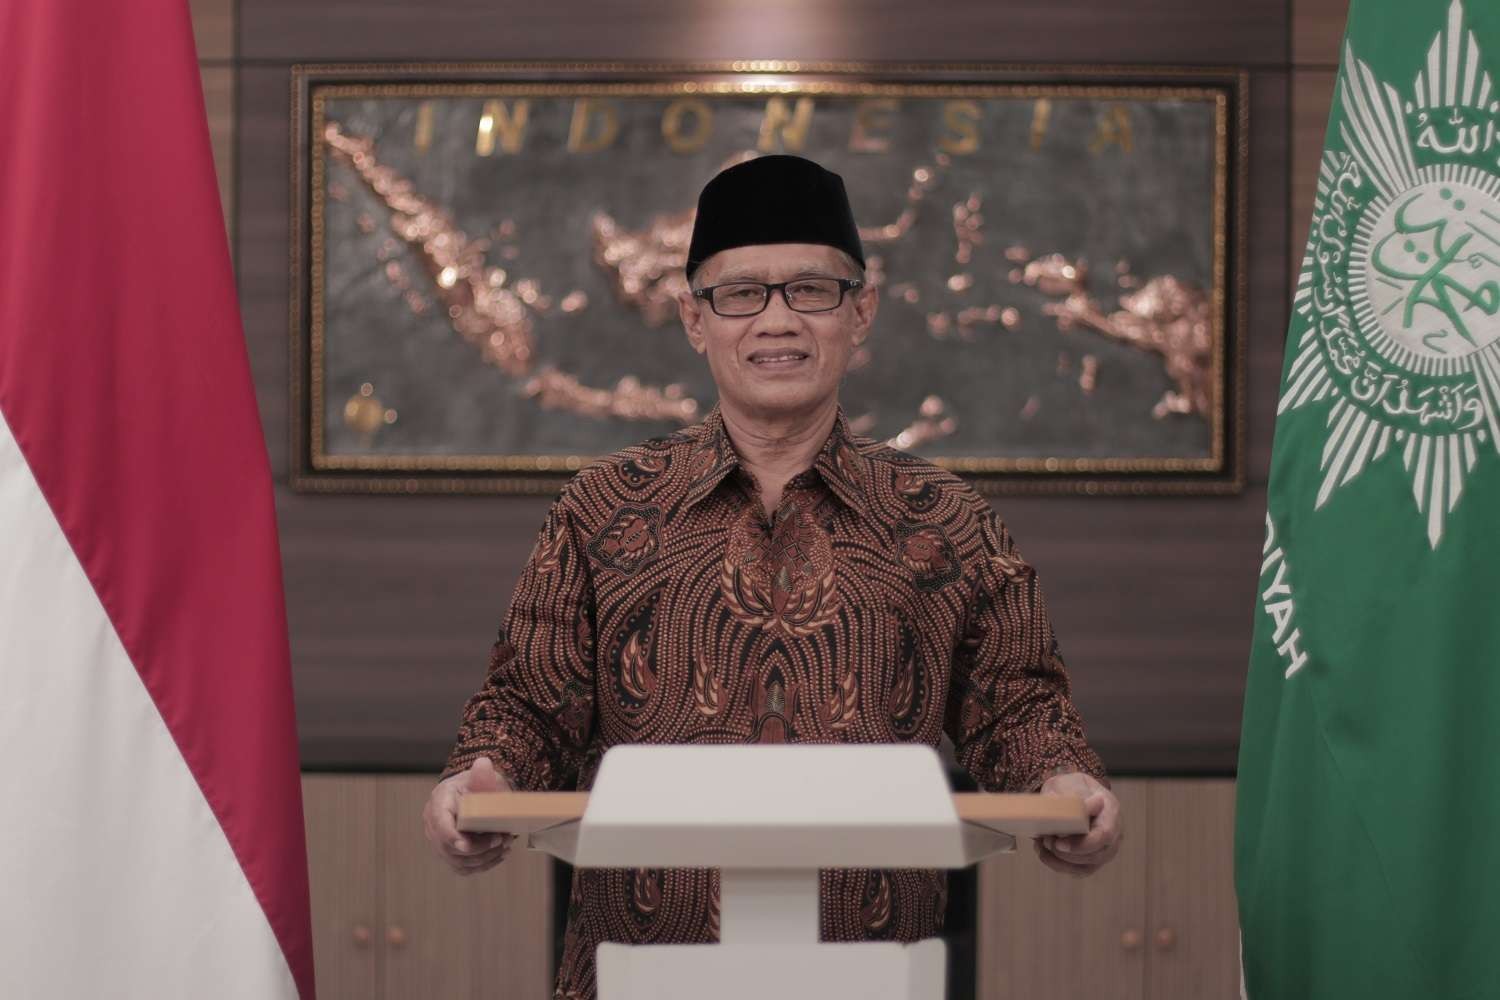 Ketua Umum PP Muhammadiyah, Haedar Nashir. (Foto: muhammadiyah.or.id)